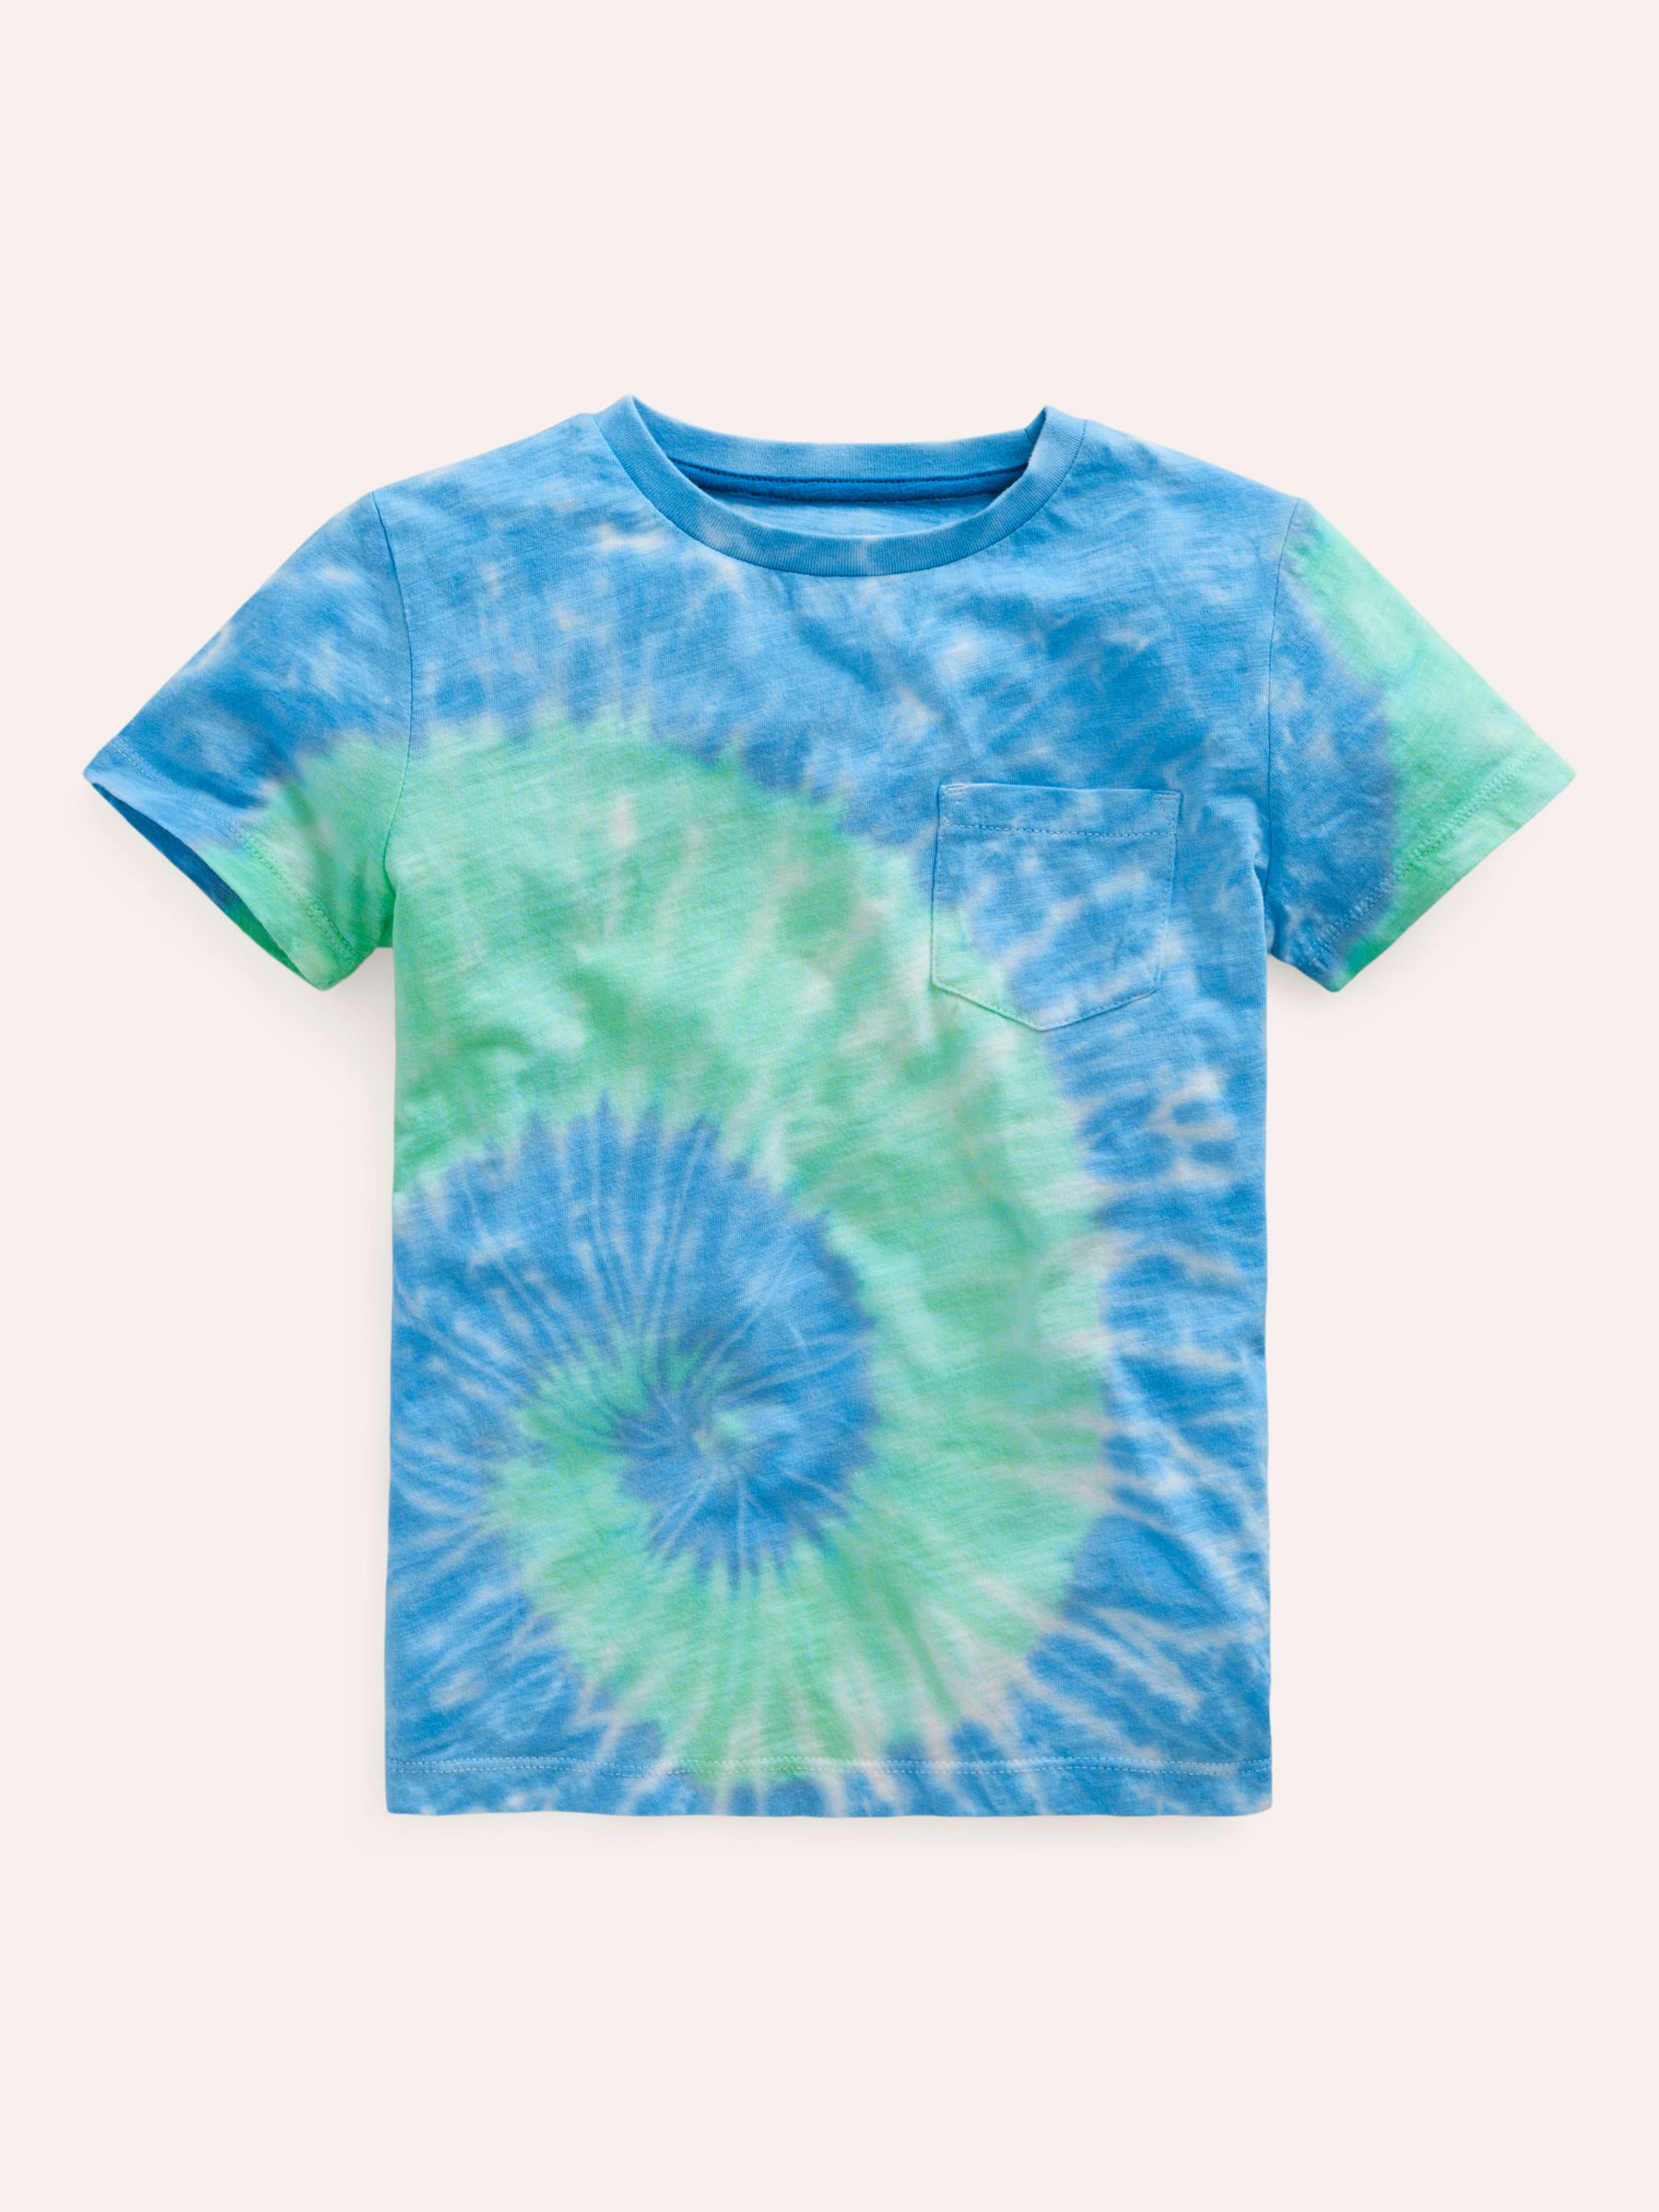 Mini Boden Kids' Tie Dye T-Shirt, Blue/Multi, 12-18 months